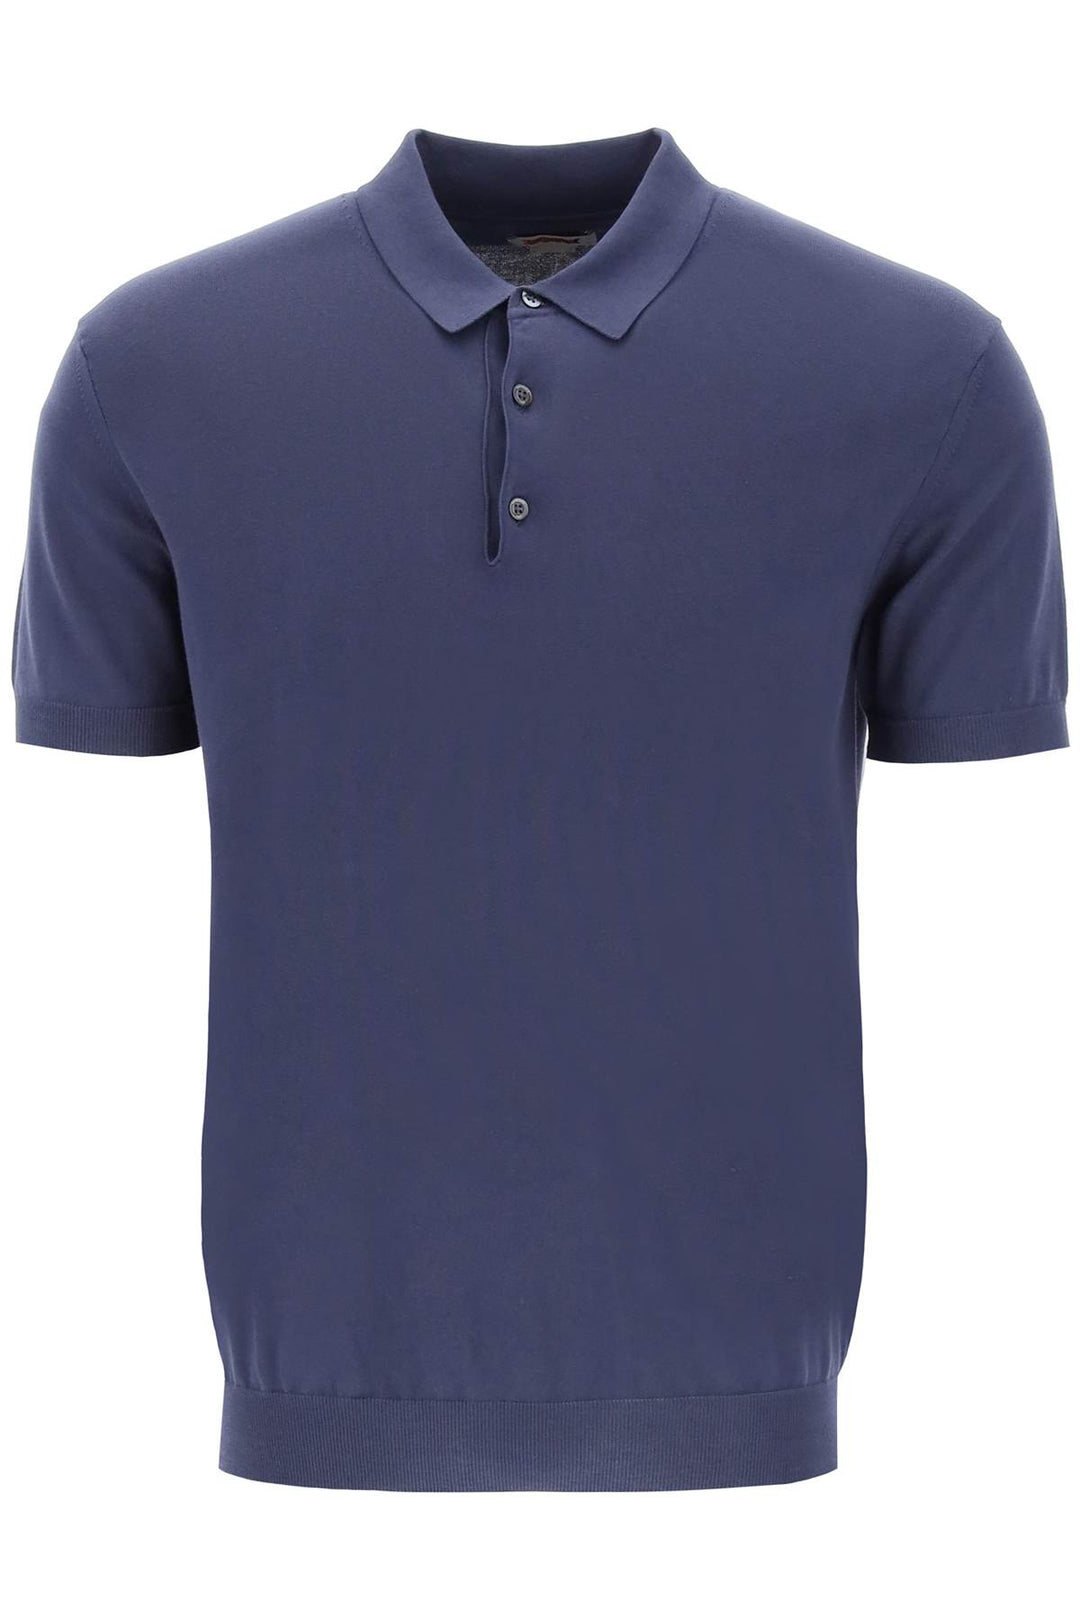 Baracuta Cotton Knit Polo Shirt   Blu